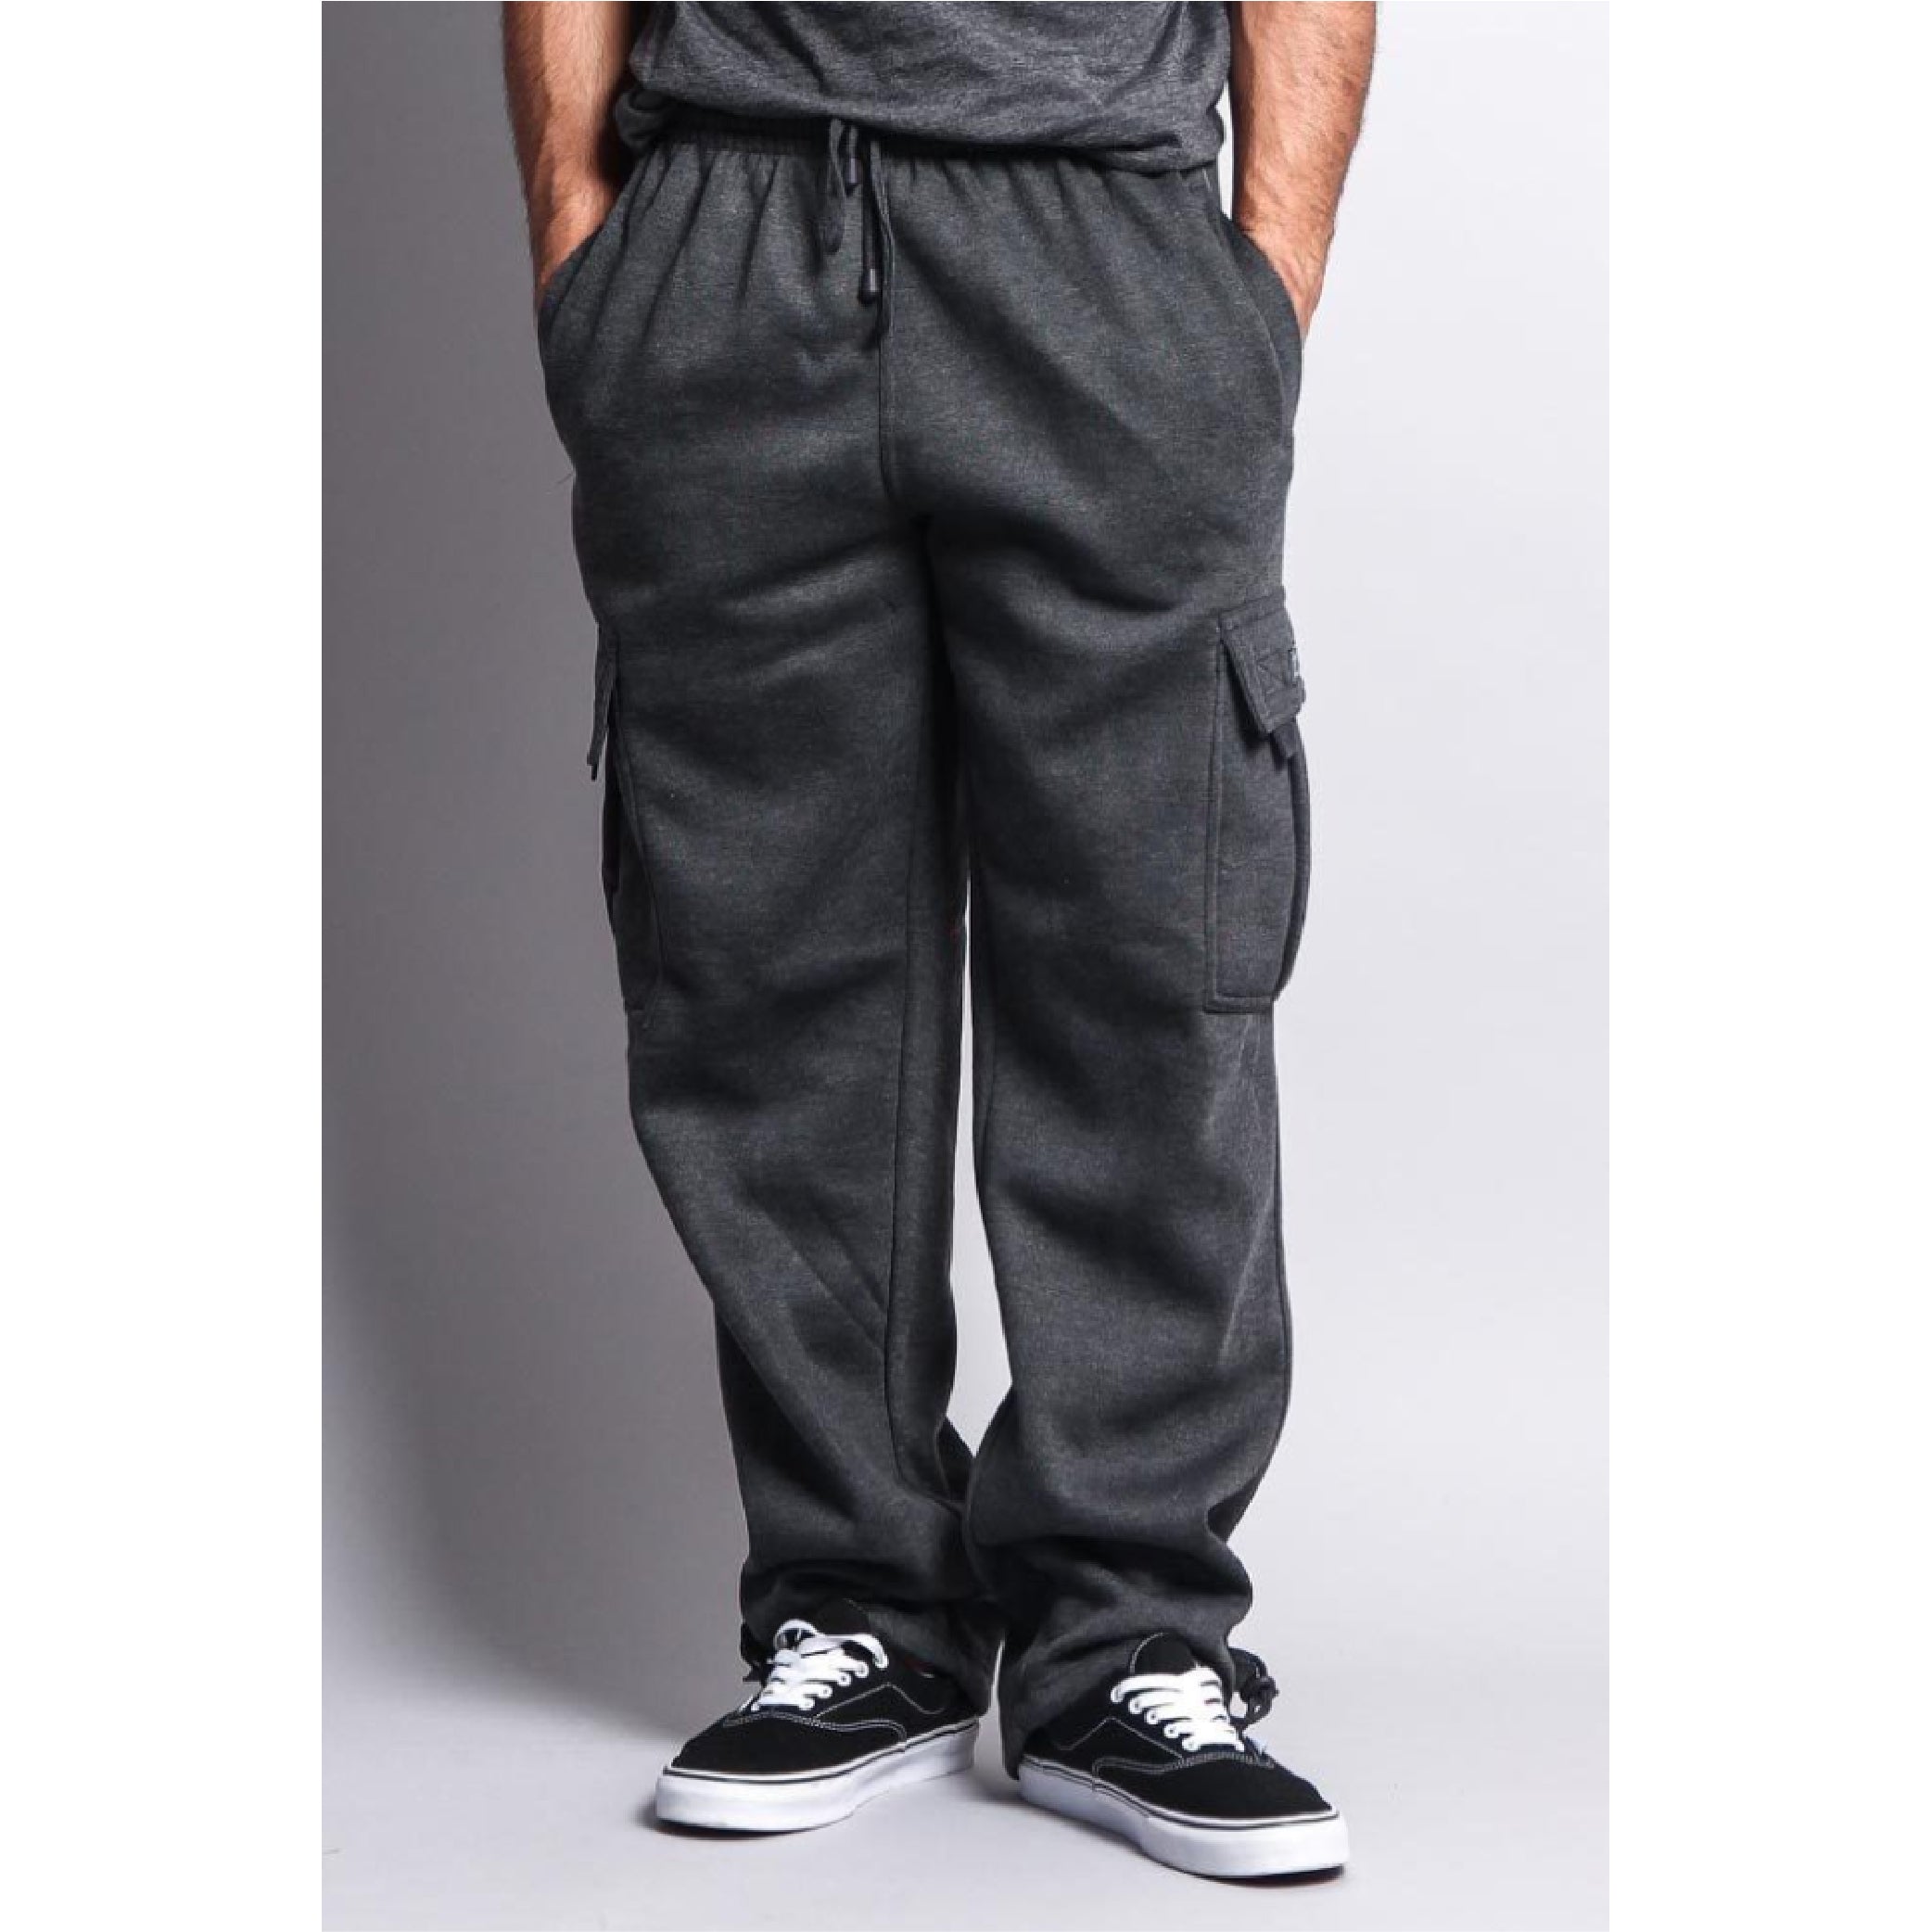 Pro 5 Mens Fleece Cargo Sweatpants,Dark Grey,3XL 